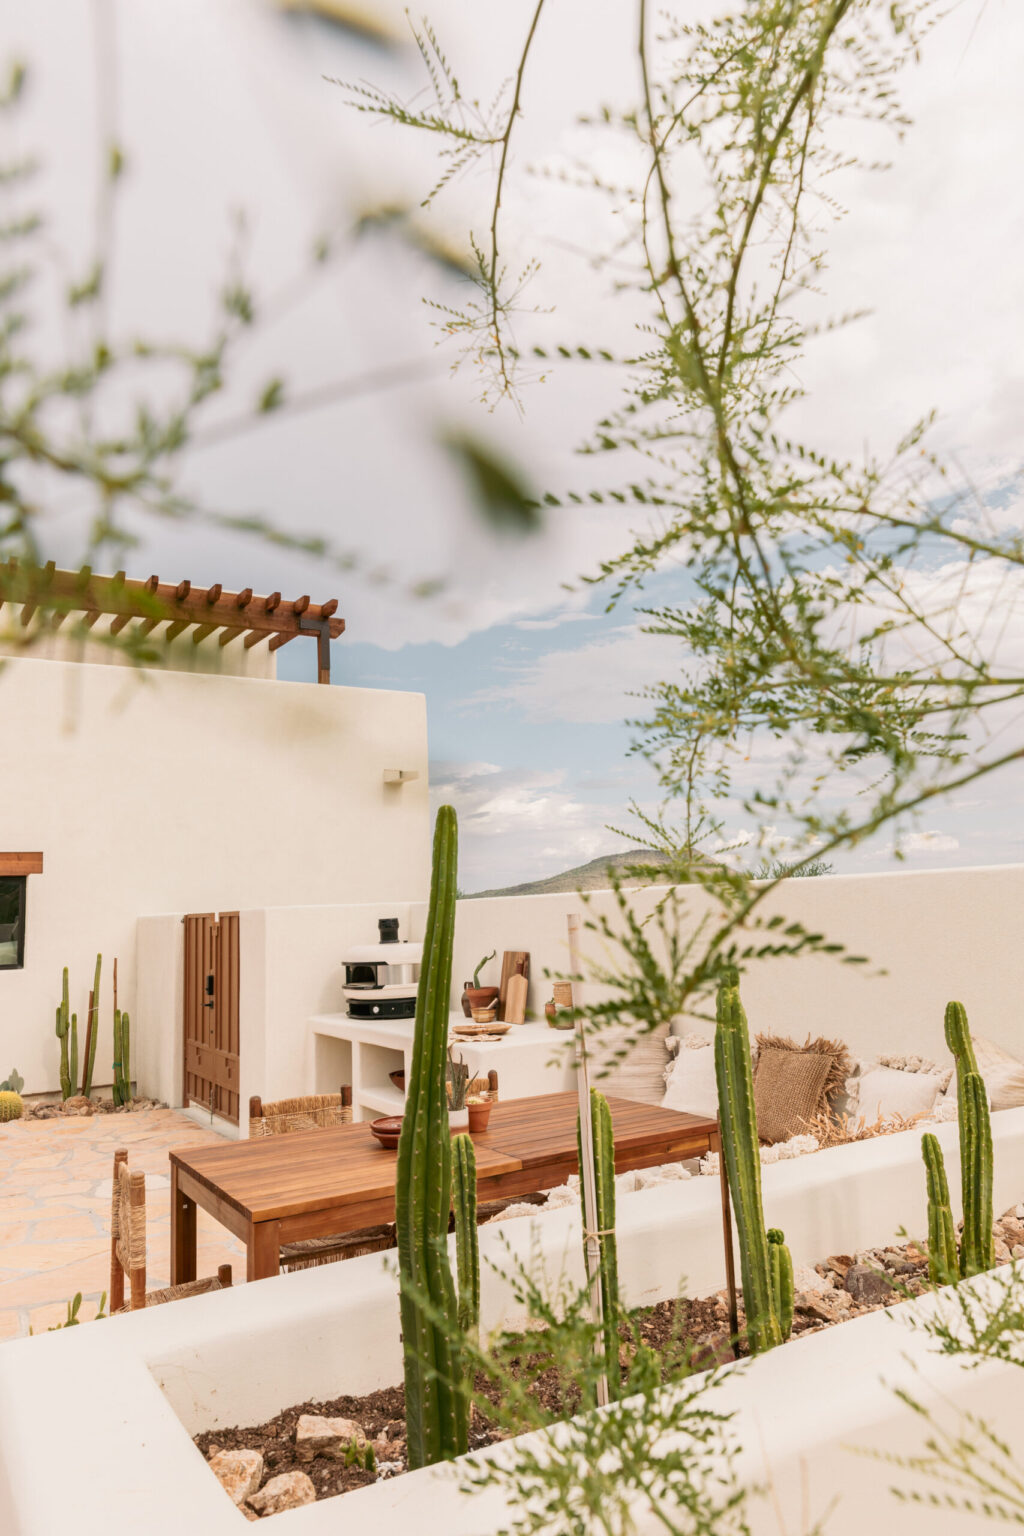 outdoor kitchen - stucco Mediterranean style - southwest desert backyard - cactus built in planter